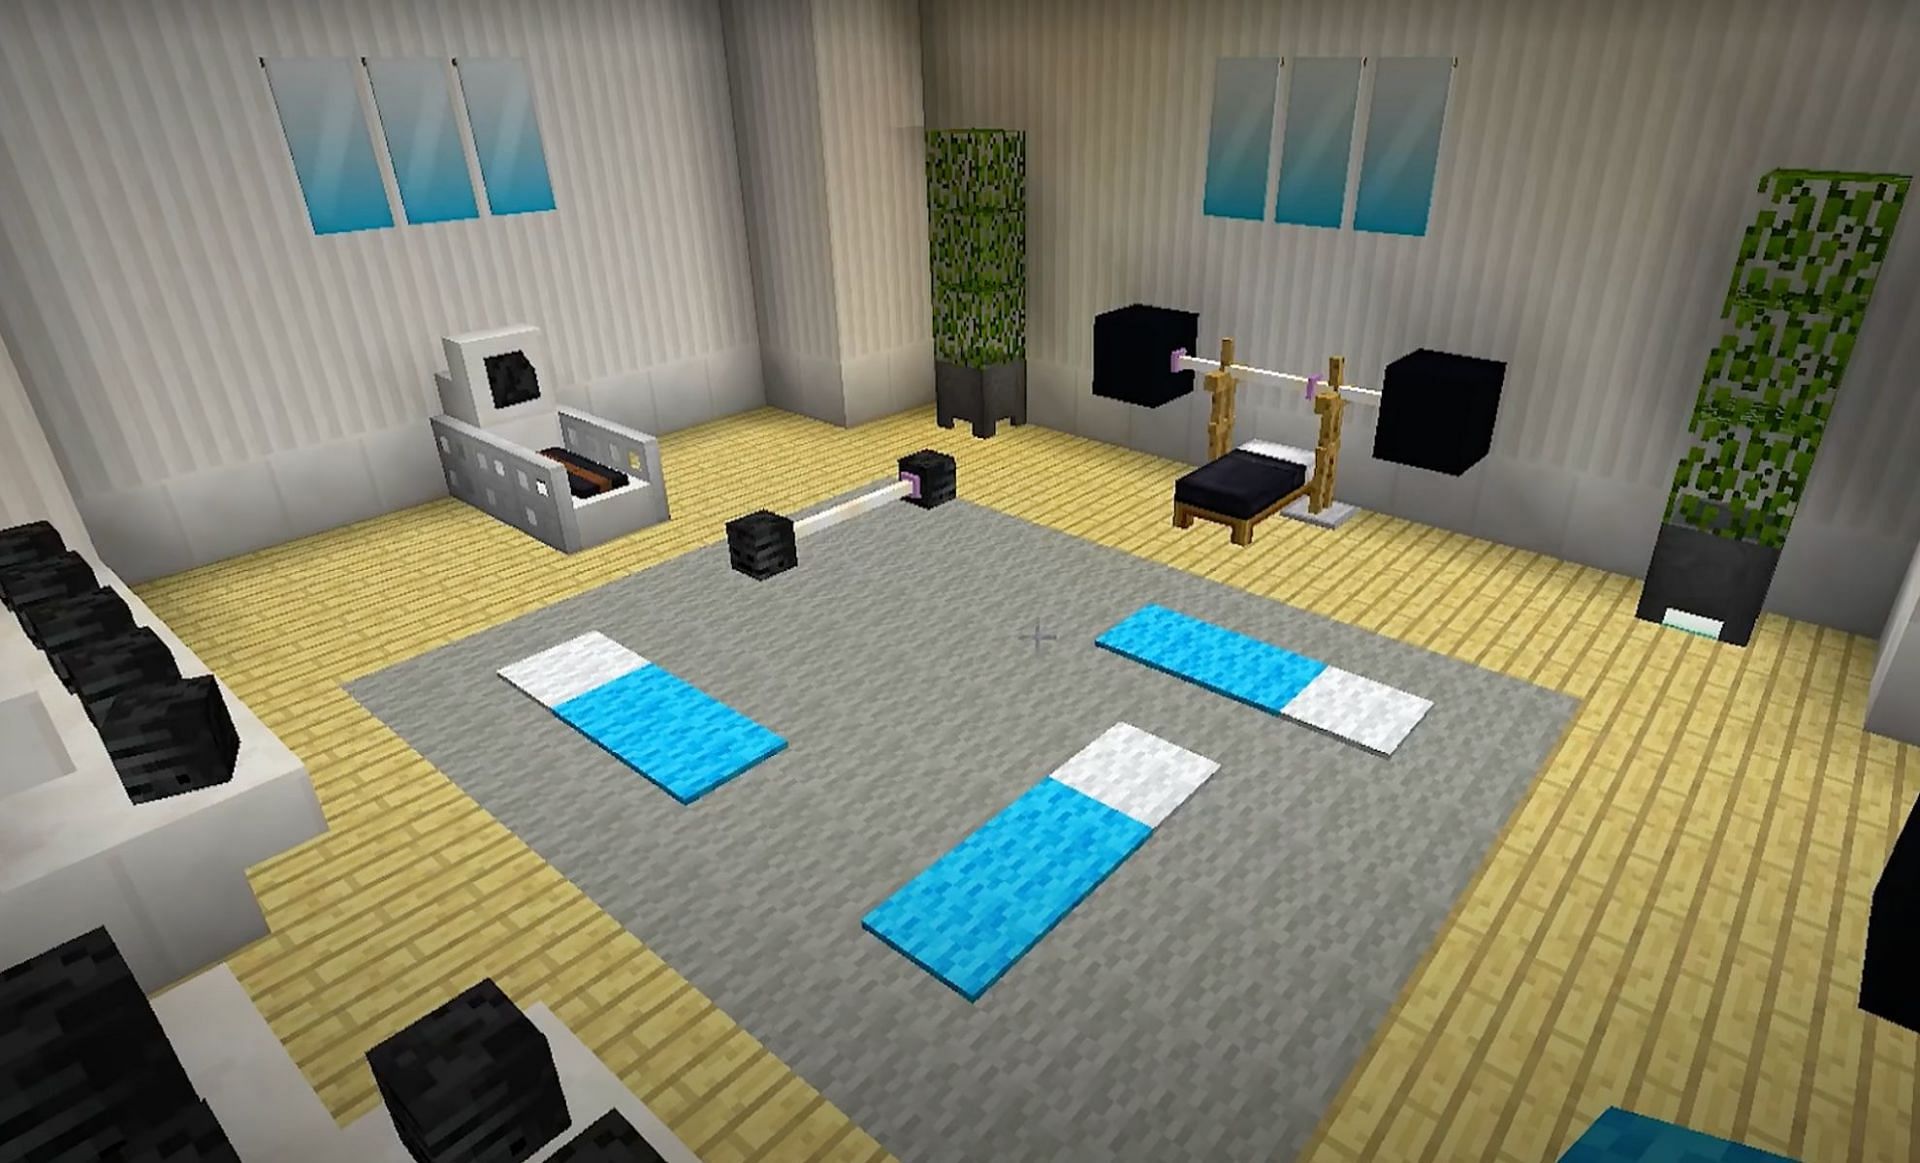 Gym in Minecraft (Image via Biggs87x on YouTube)